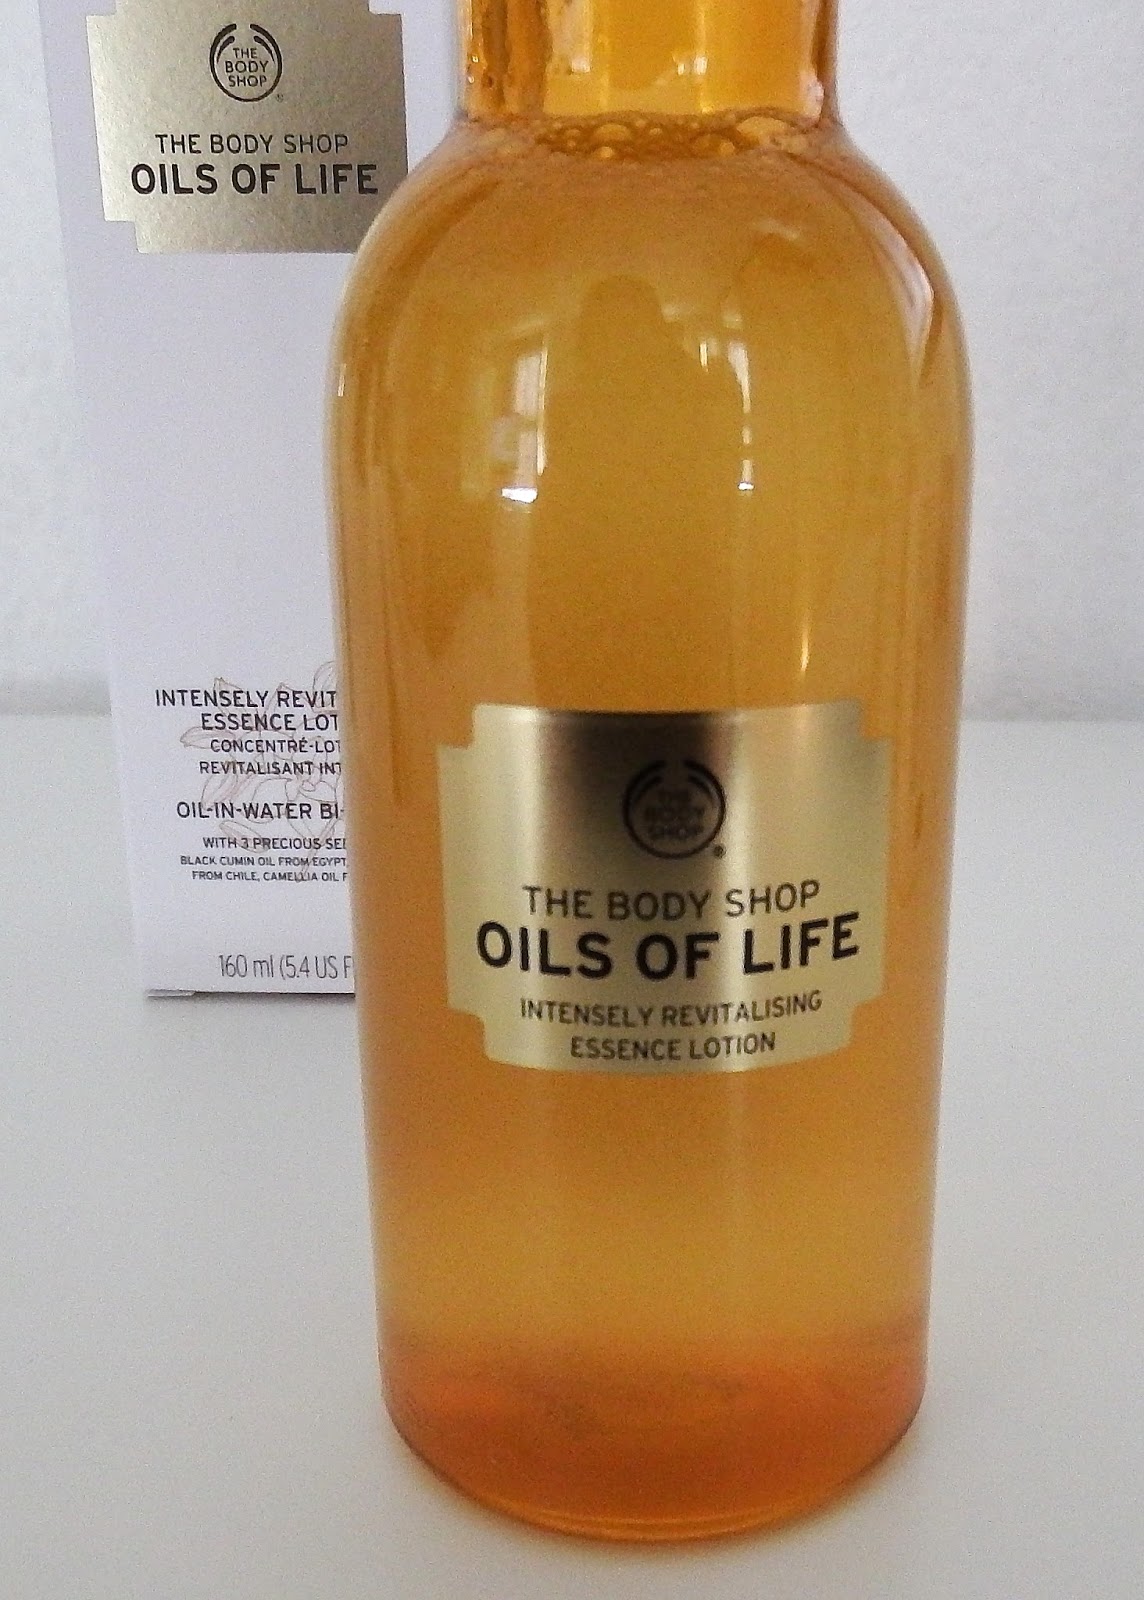 kassette vinter Temmelig The Body Shop Oils Of Life Range Review - Essence Lotion and Facial Oil |  Maiyabellexo